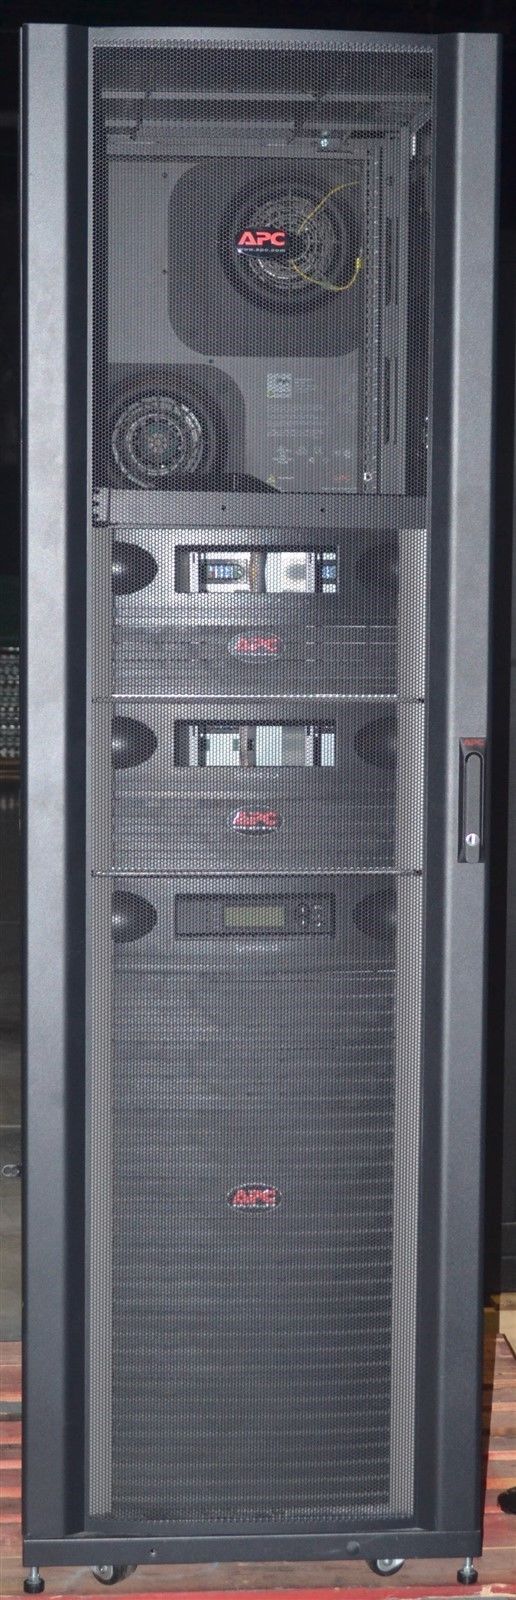 APC NetShelter Server Rack, Rack Cooling AR3100, Symmetra AFC115 OM-7053 PDU